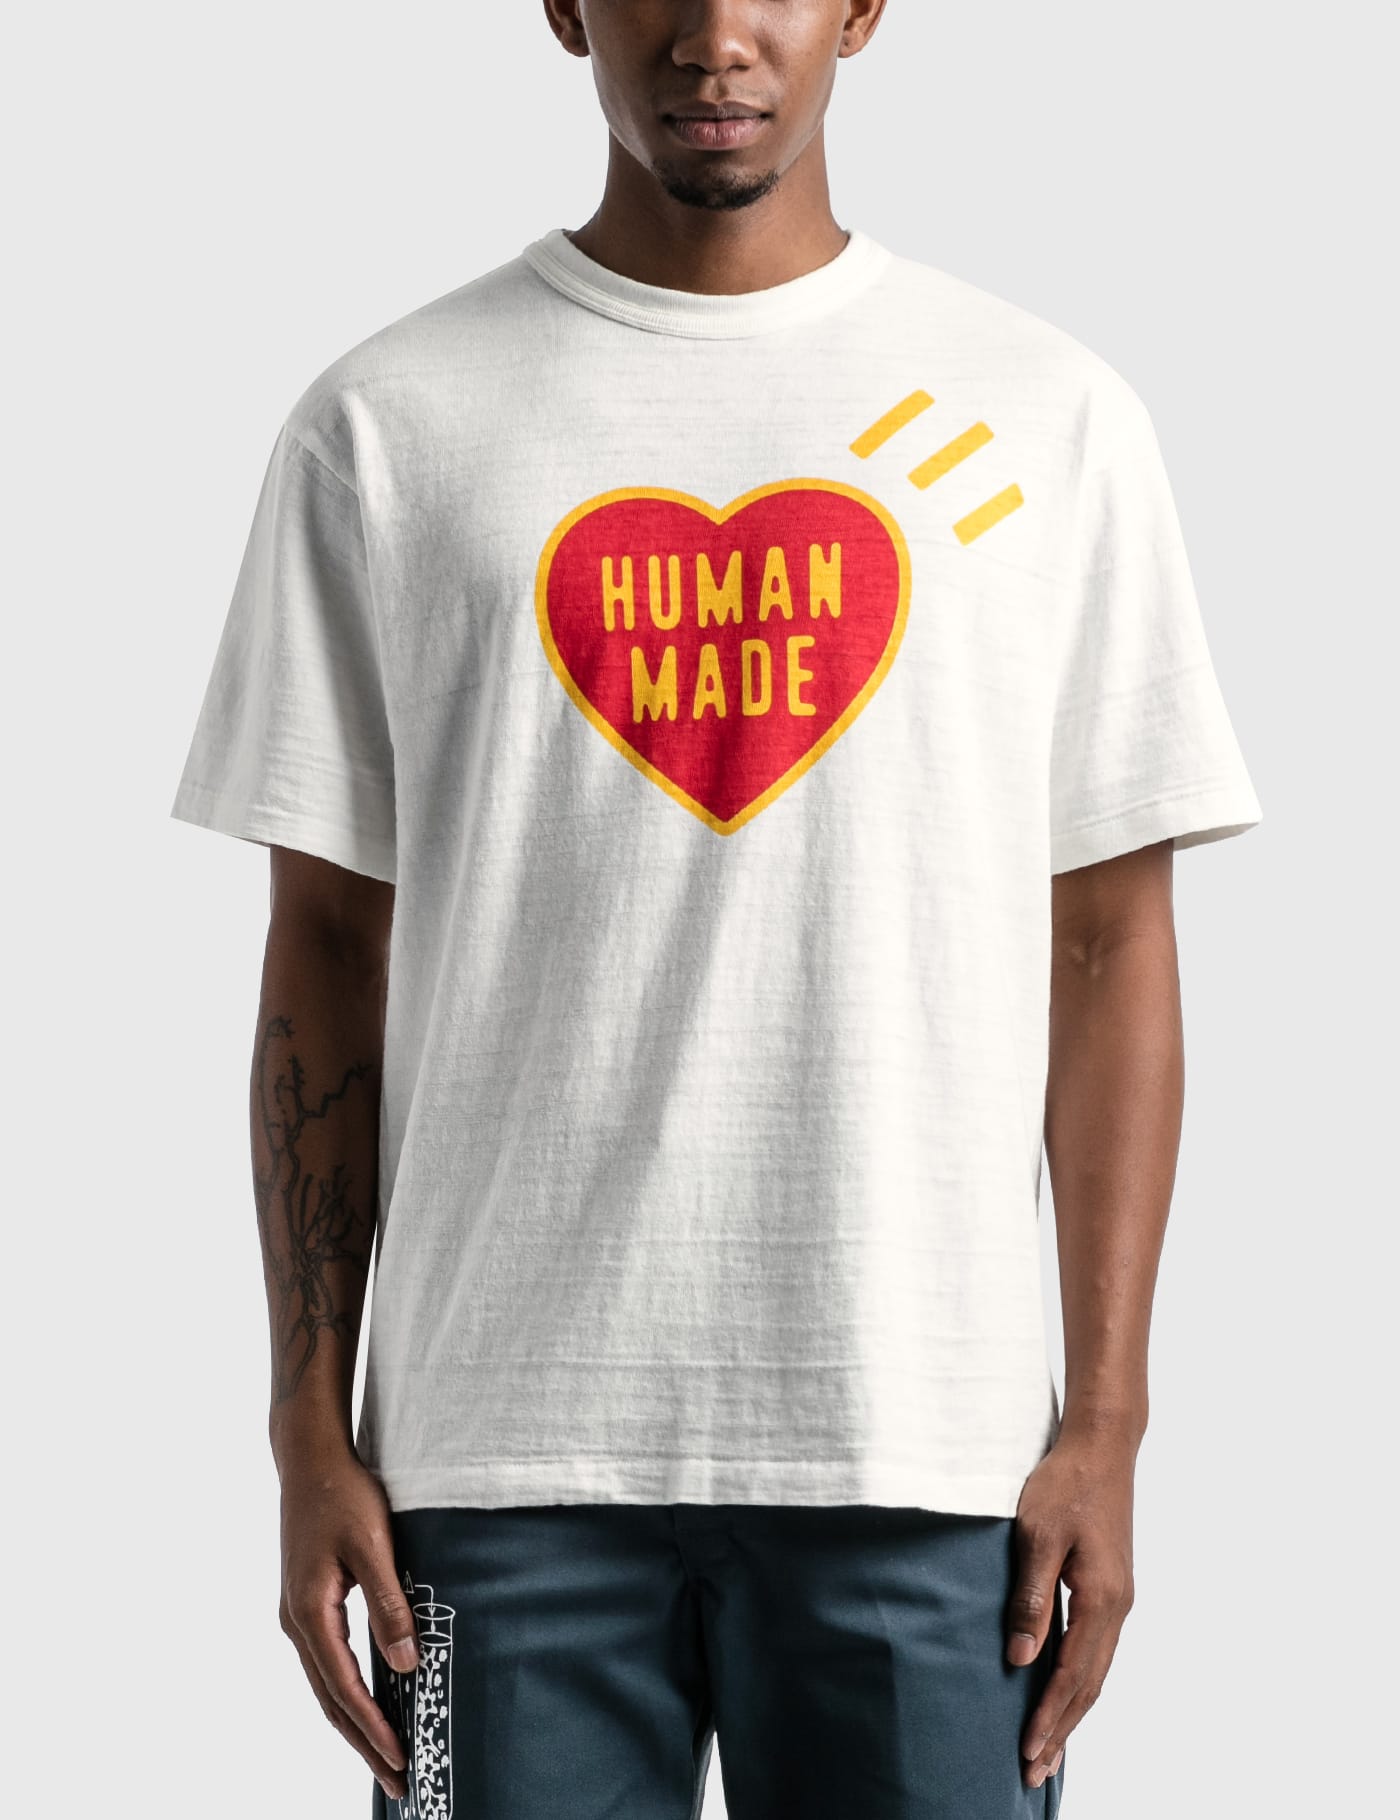 Human Made - T-Shirt #2026 | HBX - Globally Curated Fashion